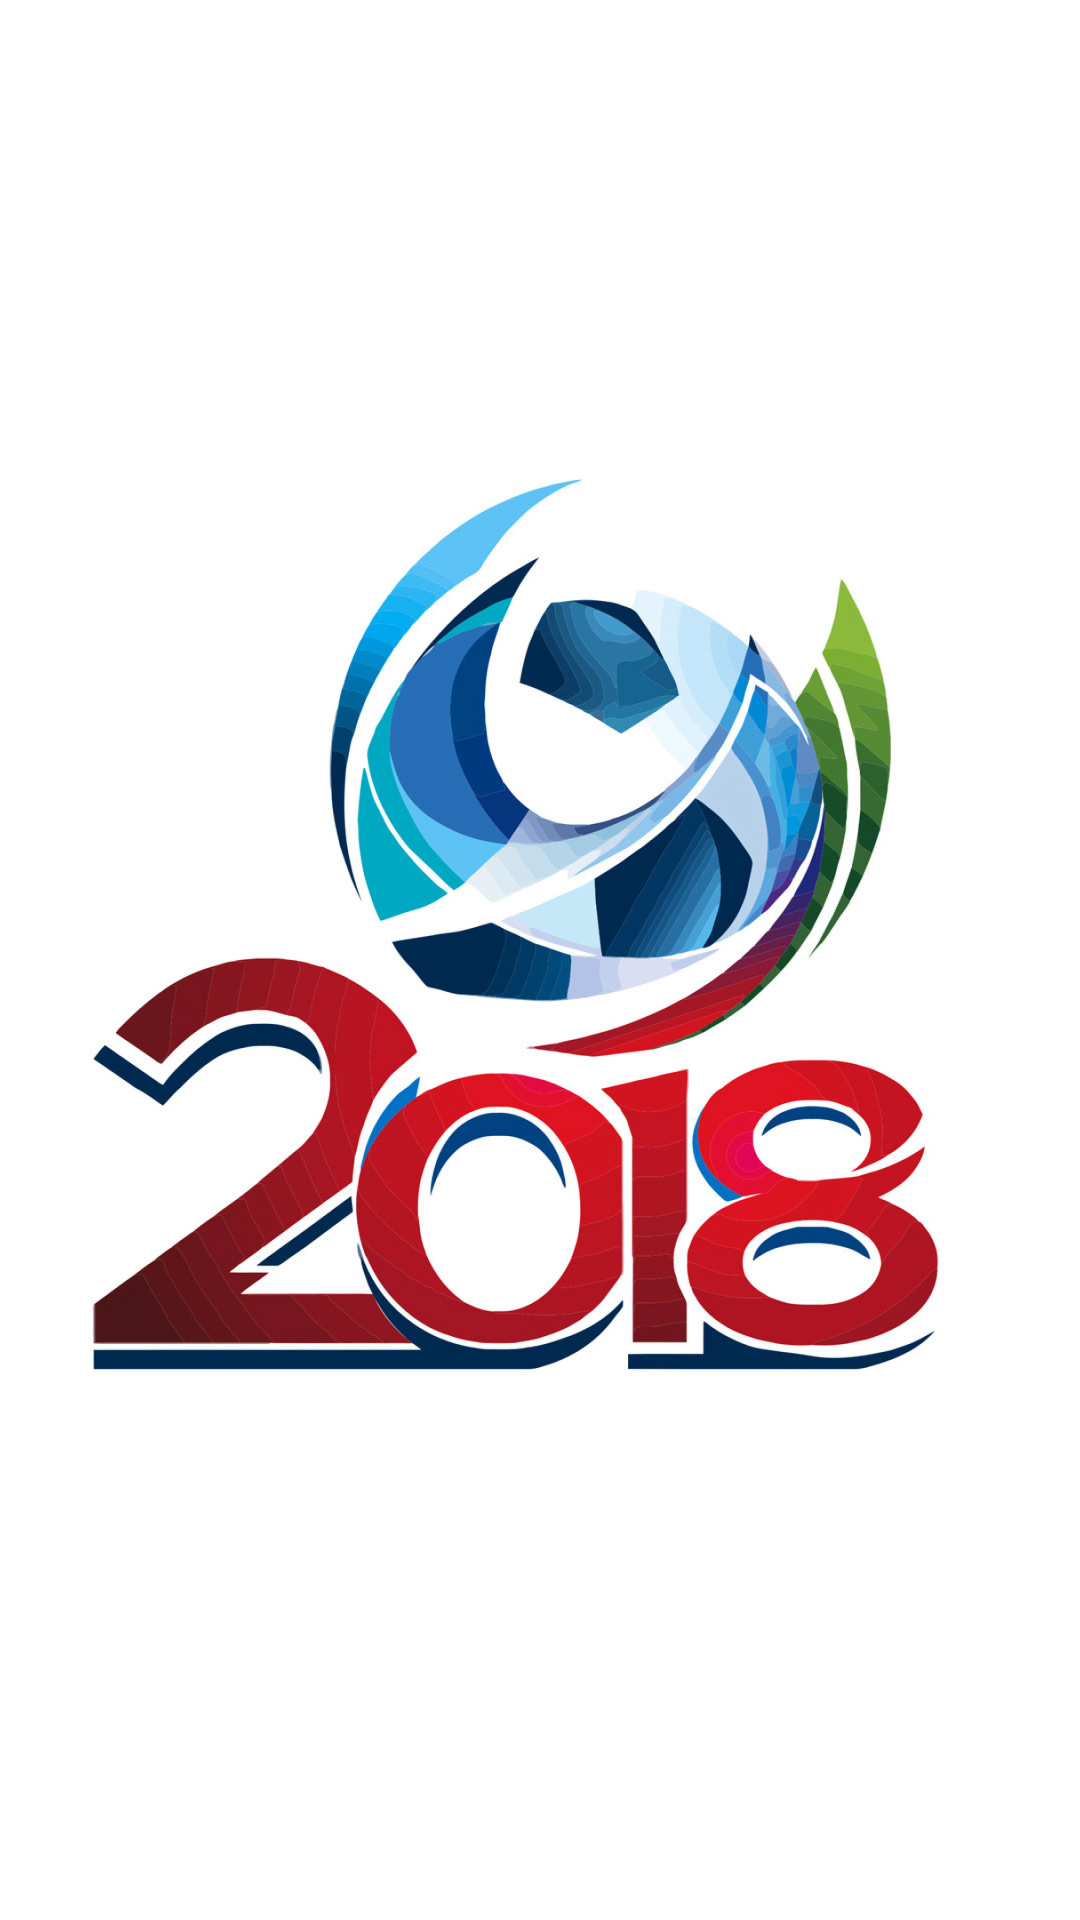 2018 FIFA World Cup in Russia wallpaper 1080x1920